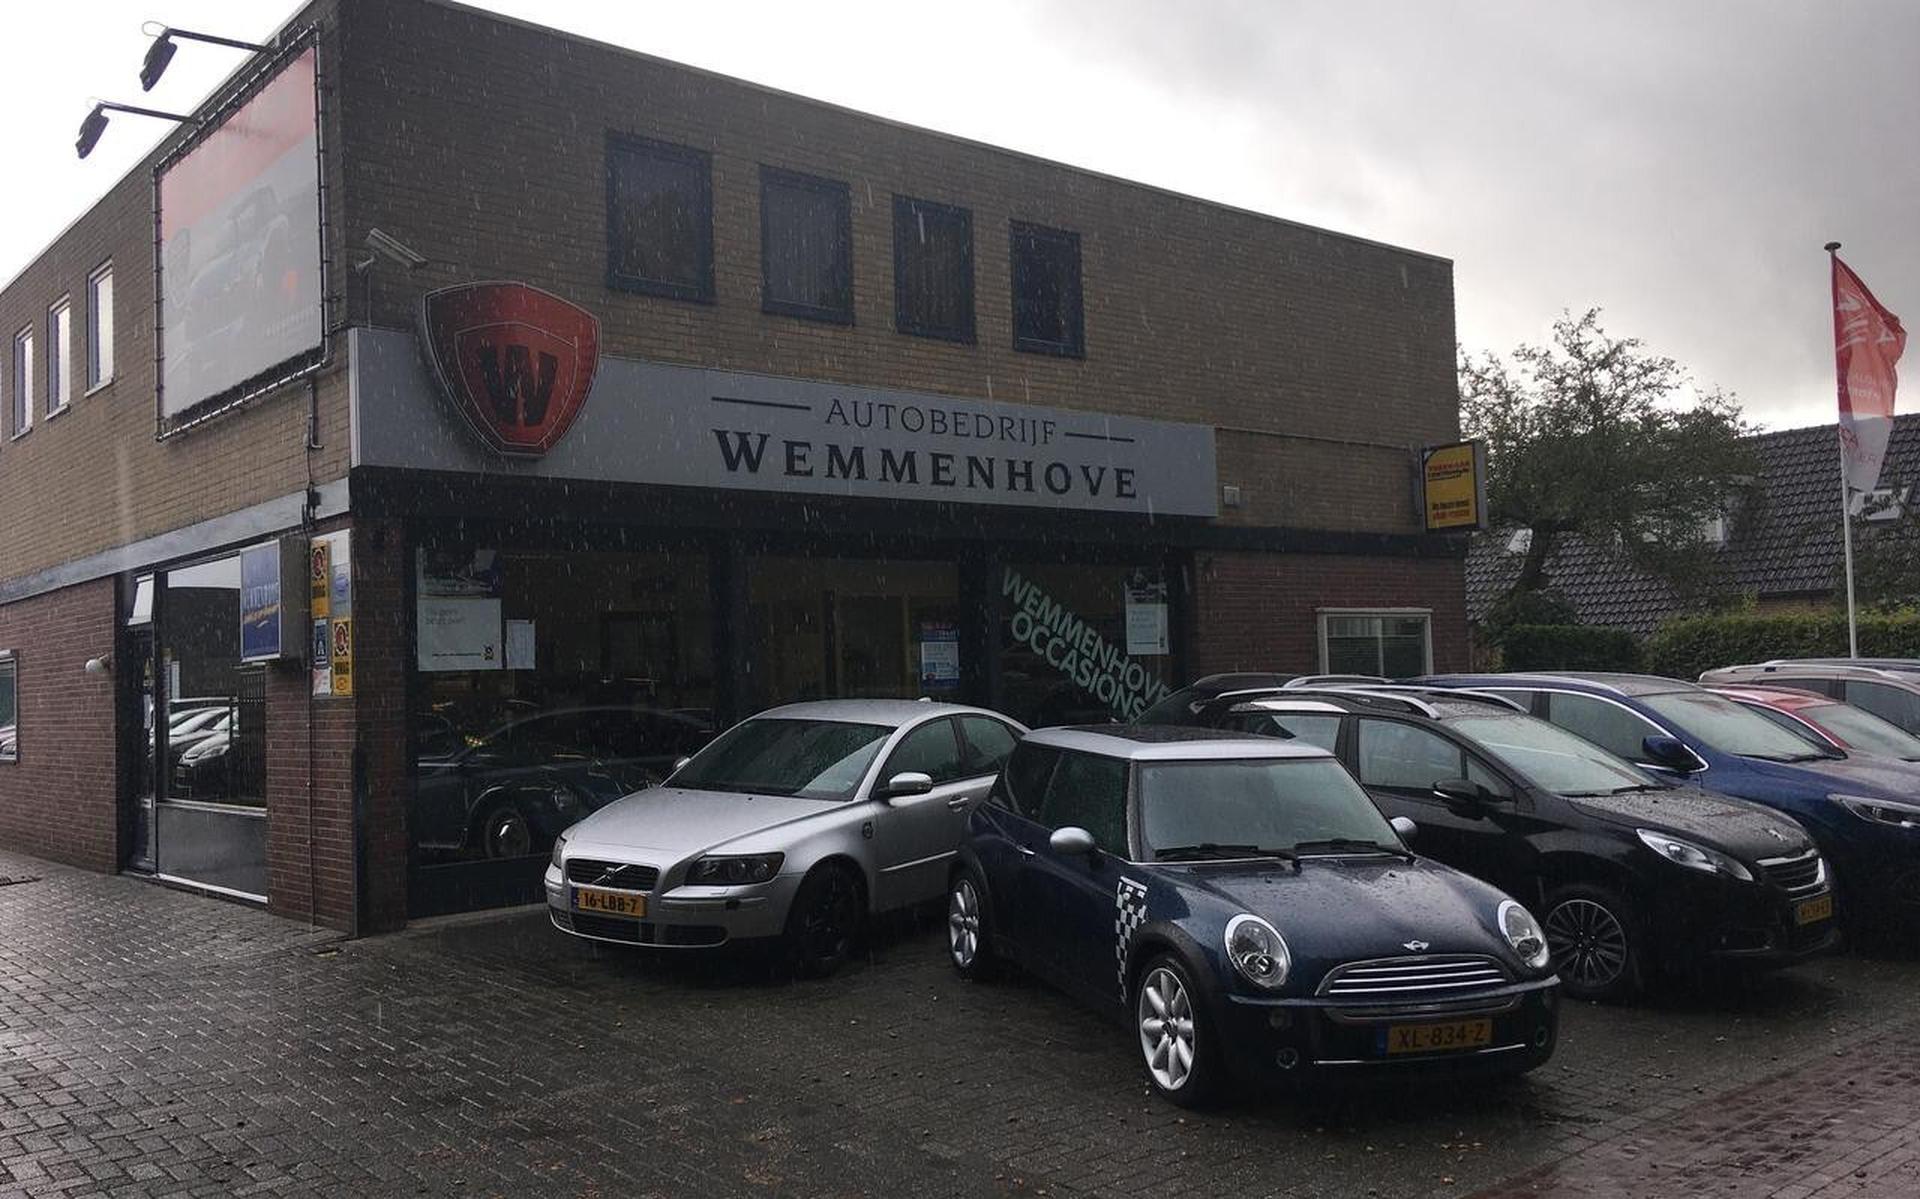 Autobedrijf Wemmenhove.